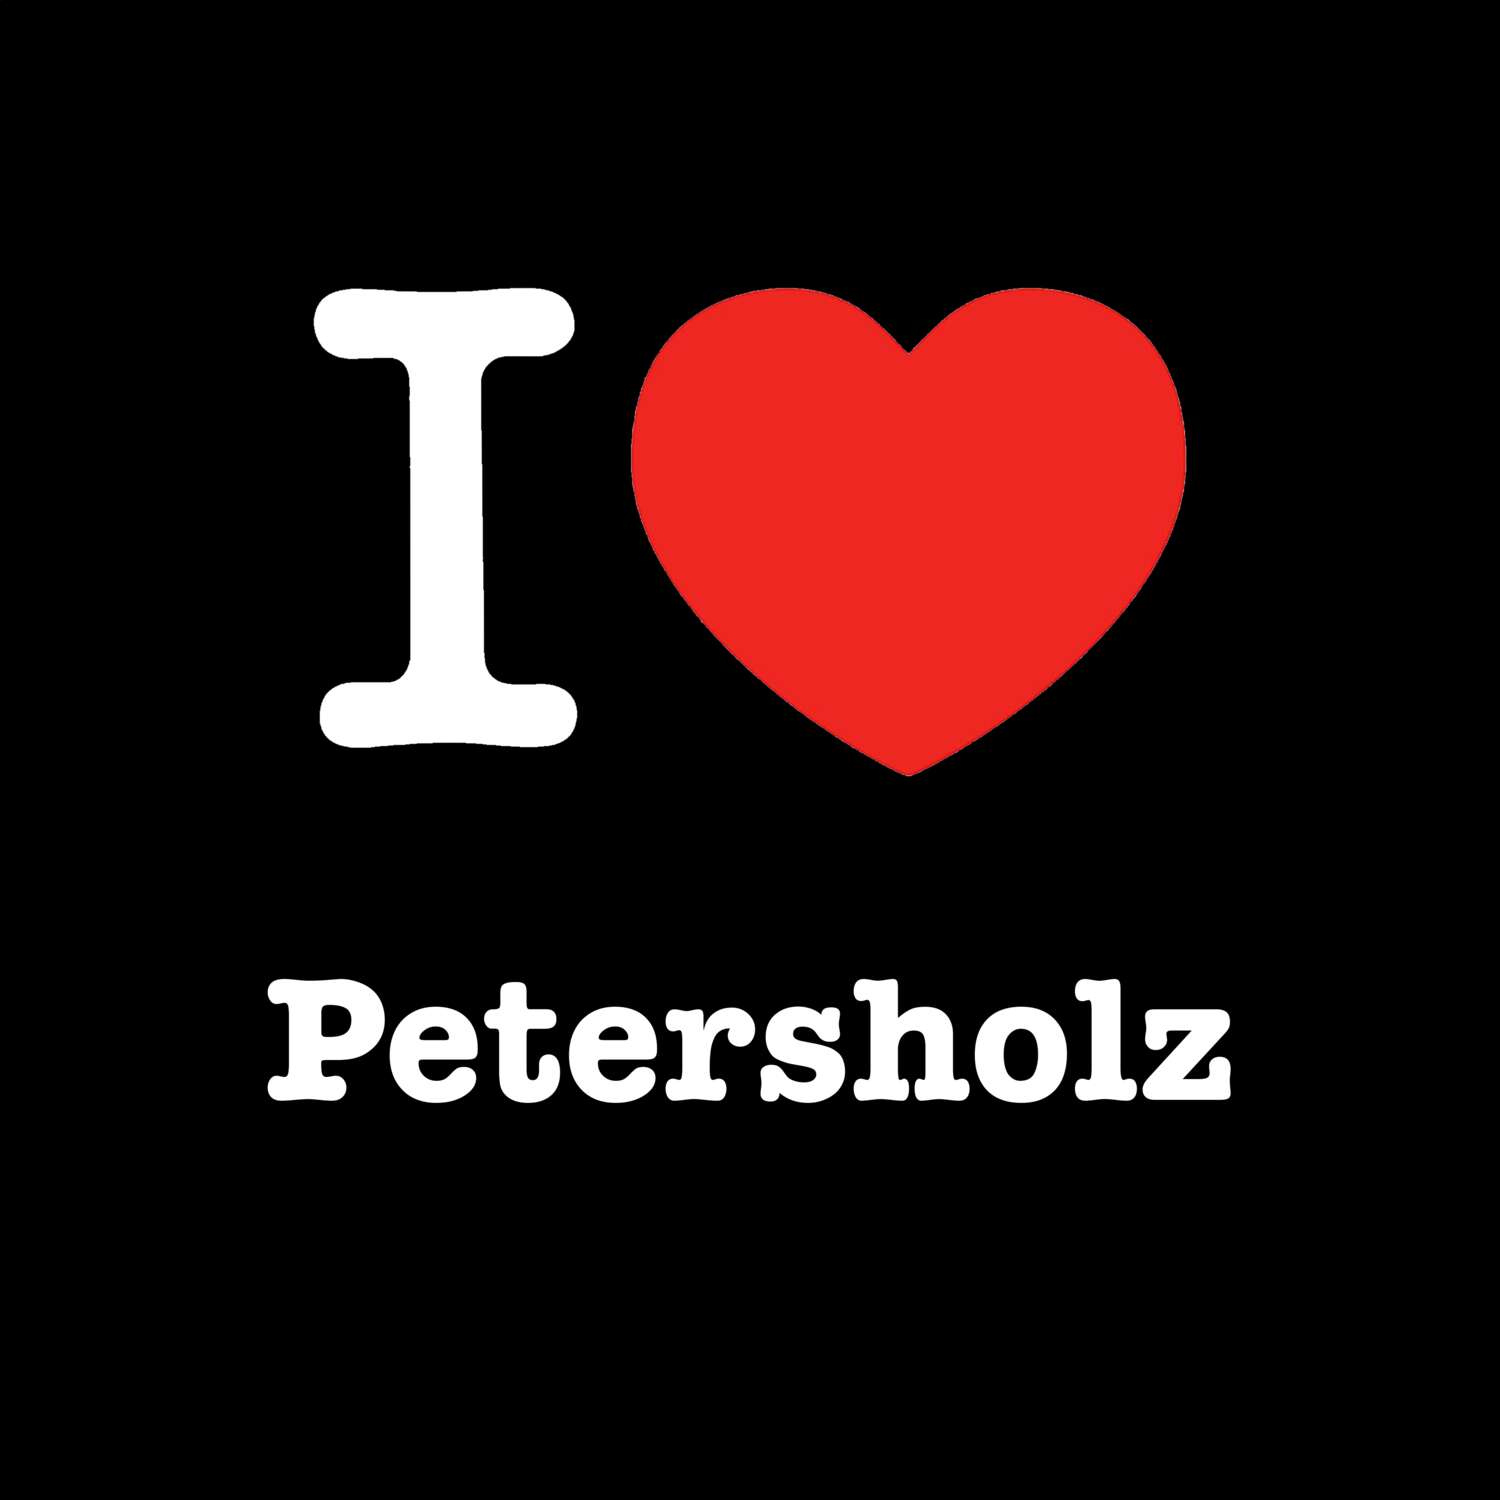 Petersholz T-Shirt »I love«